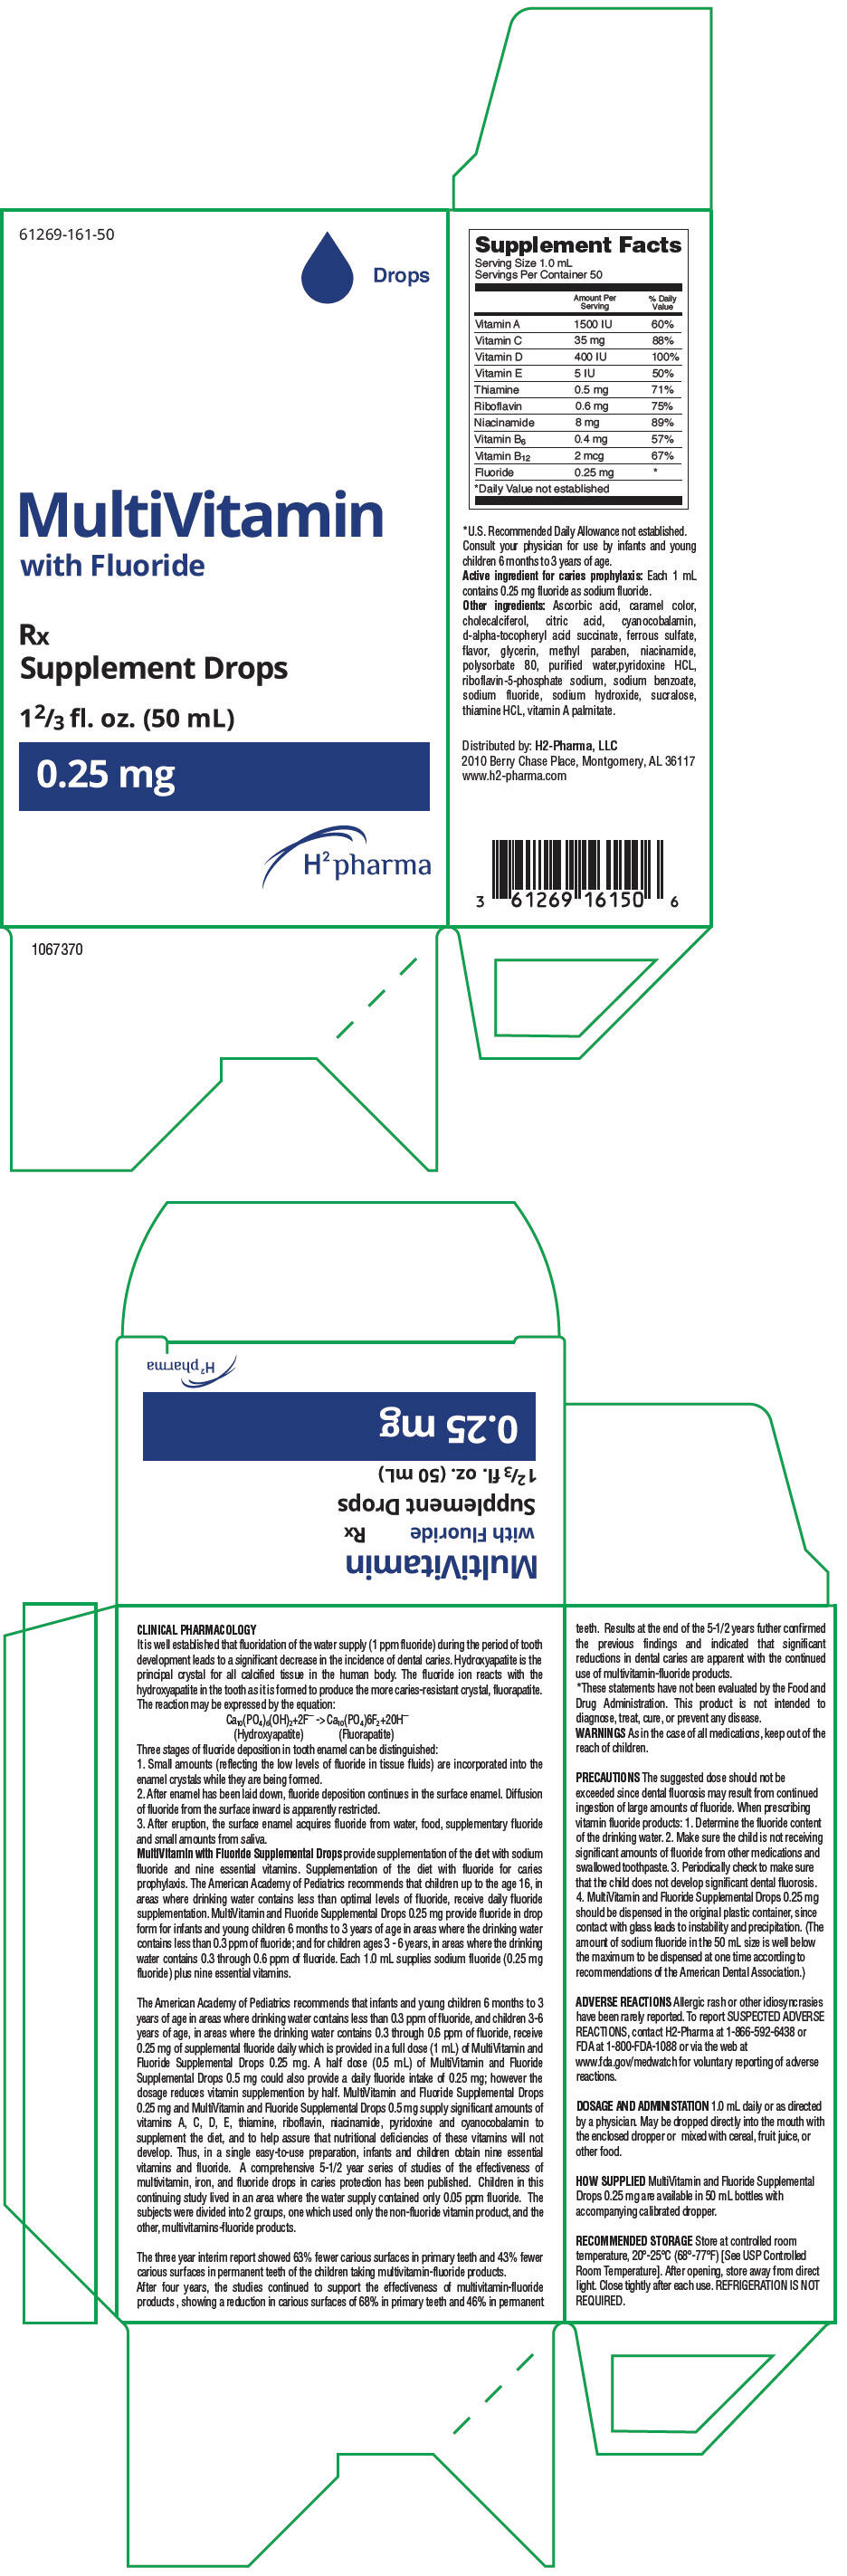 PRINCIPAL DISPLAY PANEL - 50 mL Bottle Carton